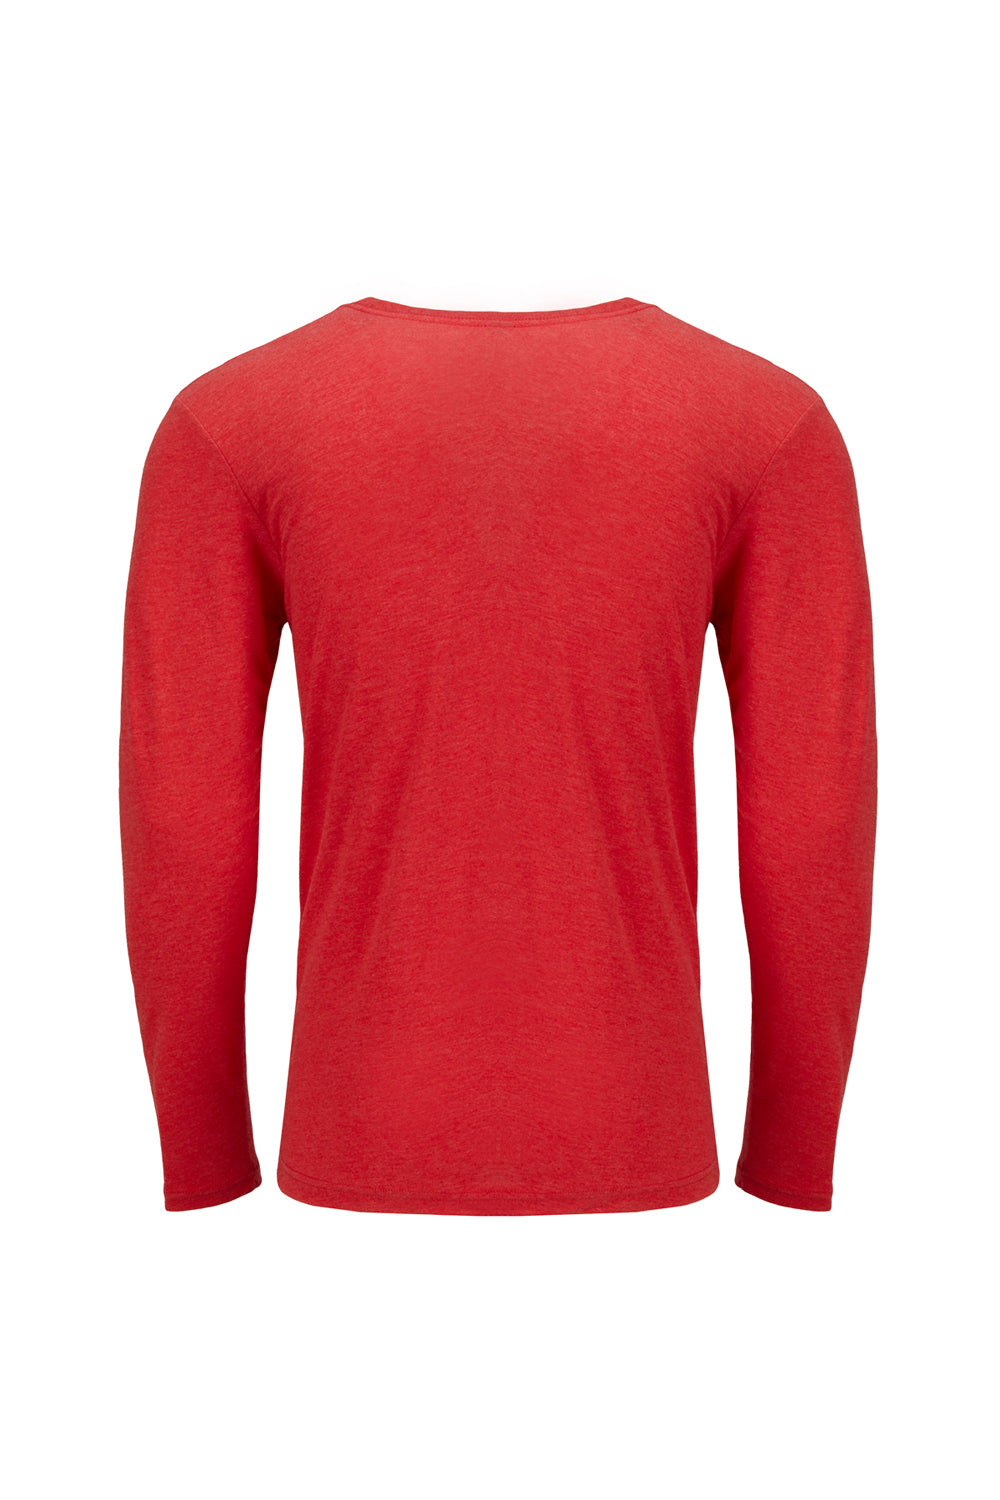 Next Level 6071 Mens Jersey Long Sleeve Crewneck T-Shirt Red Back